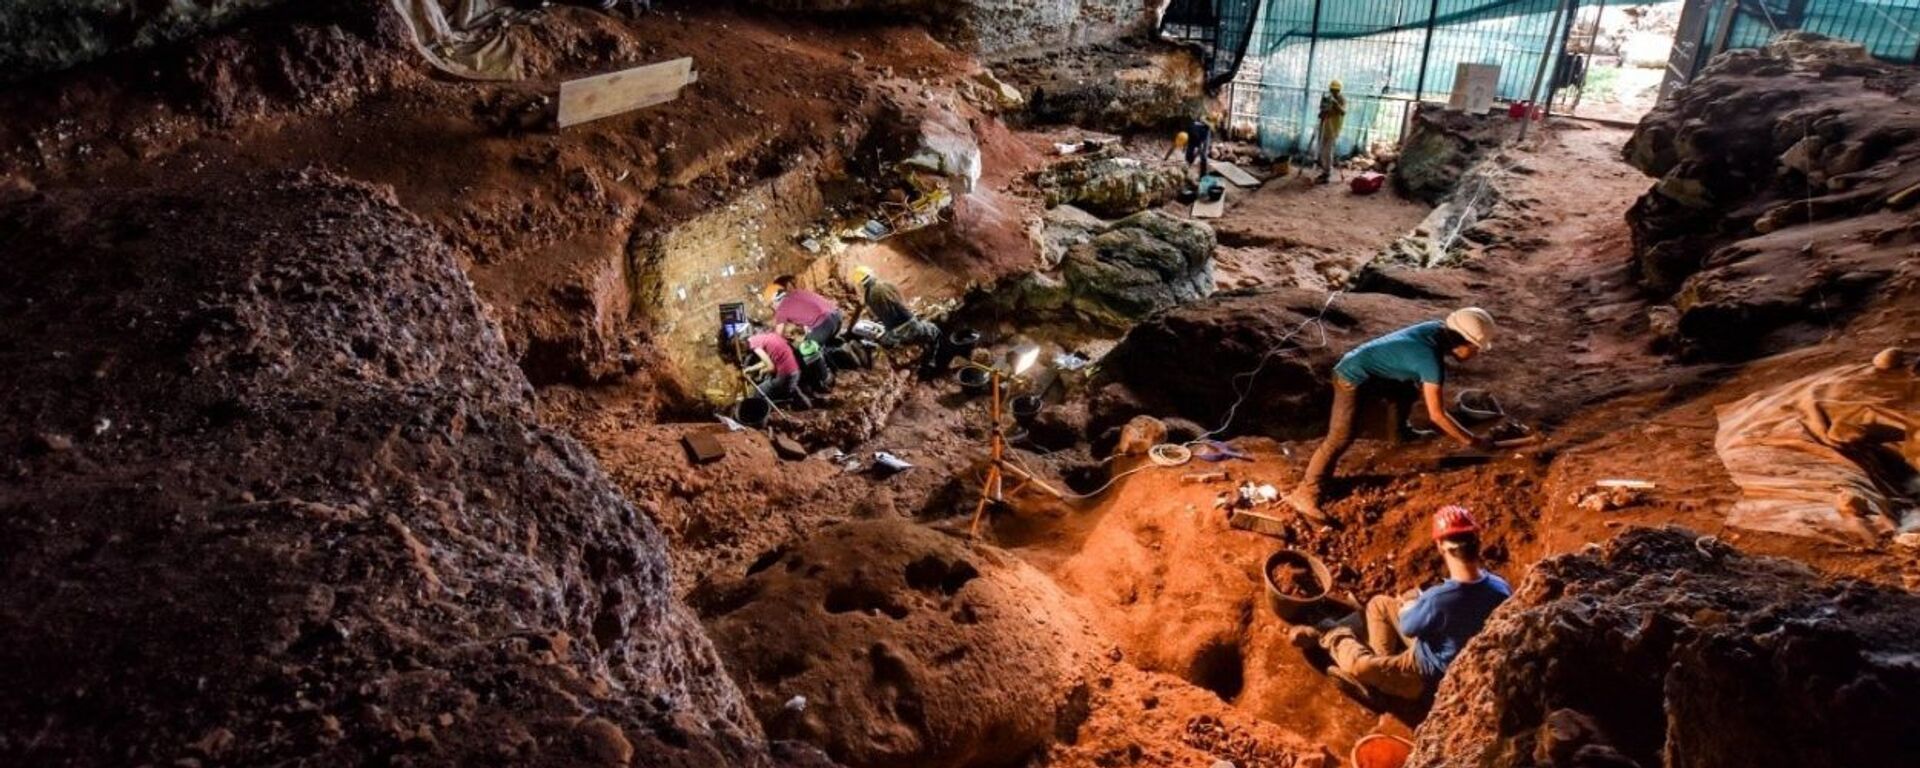 Trabalhos arqueológicos conduzidos na caverna Romanelli na Itália - Sputnik Brasil, 1920, 15.10.2021